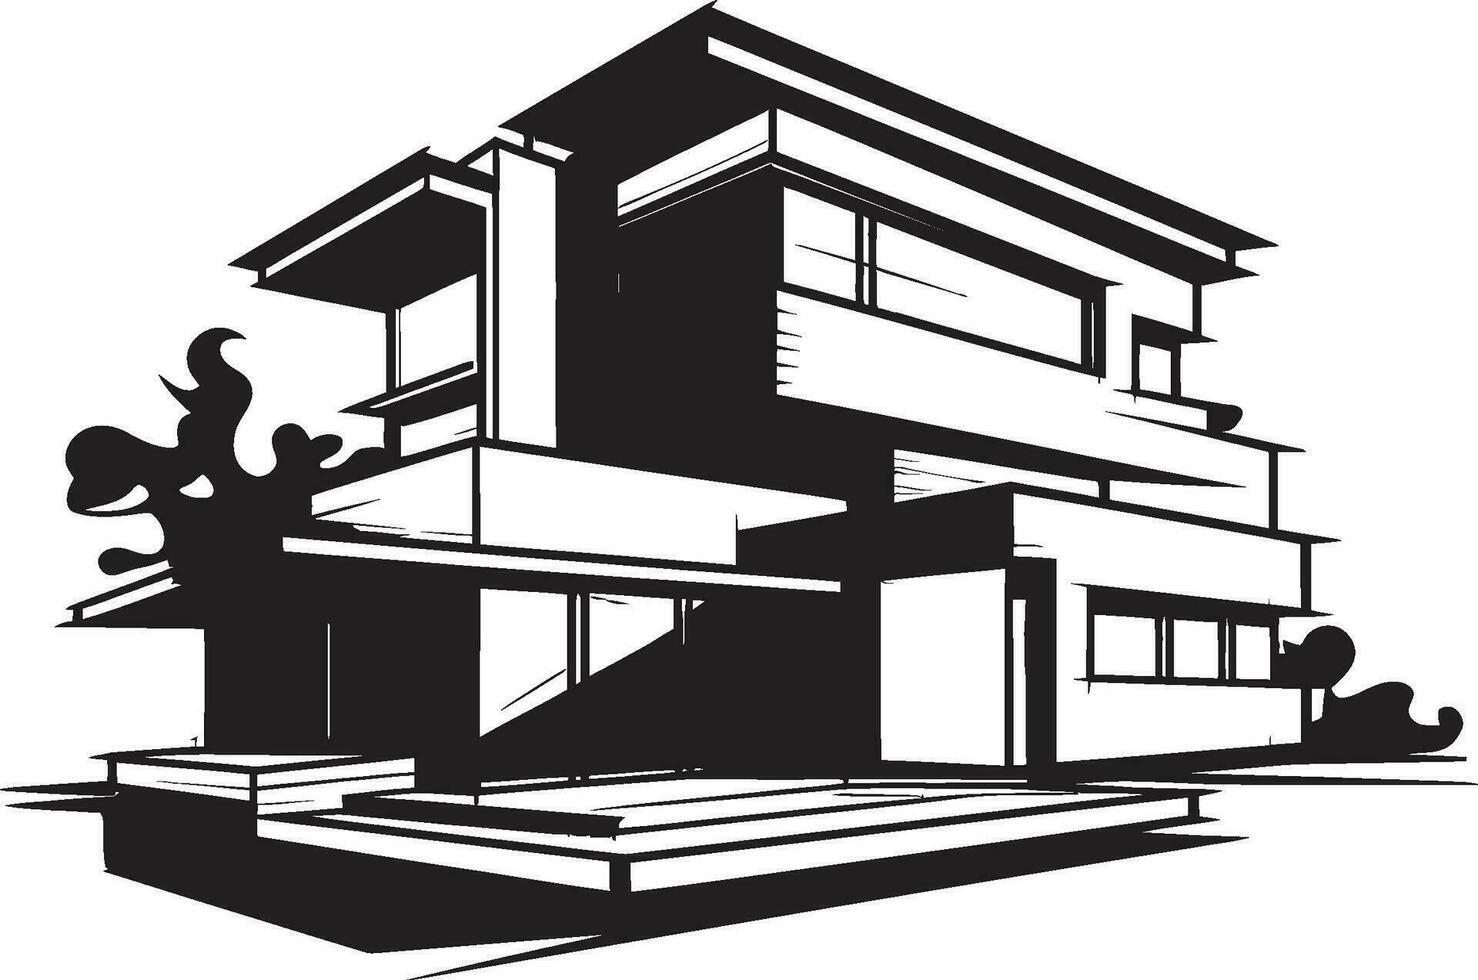 vigoroso residencia marca grueso resumido casa diseño icono poderoso vivo símbolo negrita casa bosquejo en vector formato